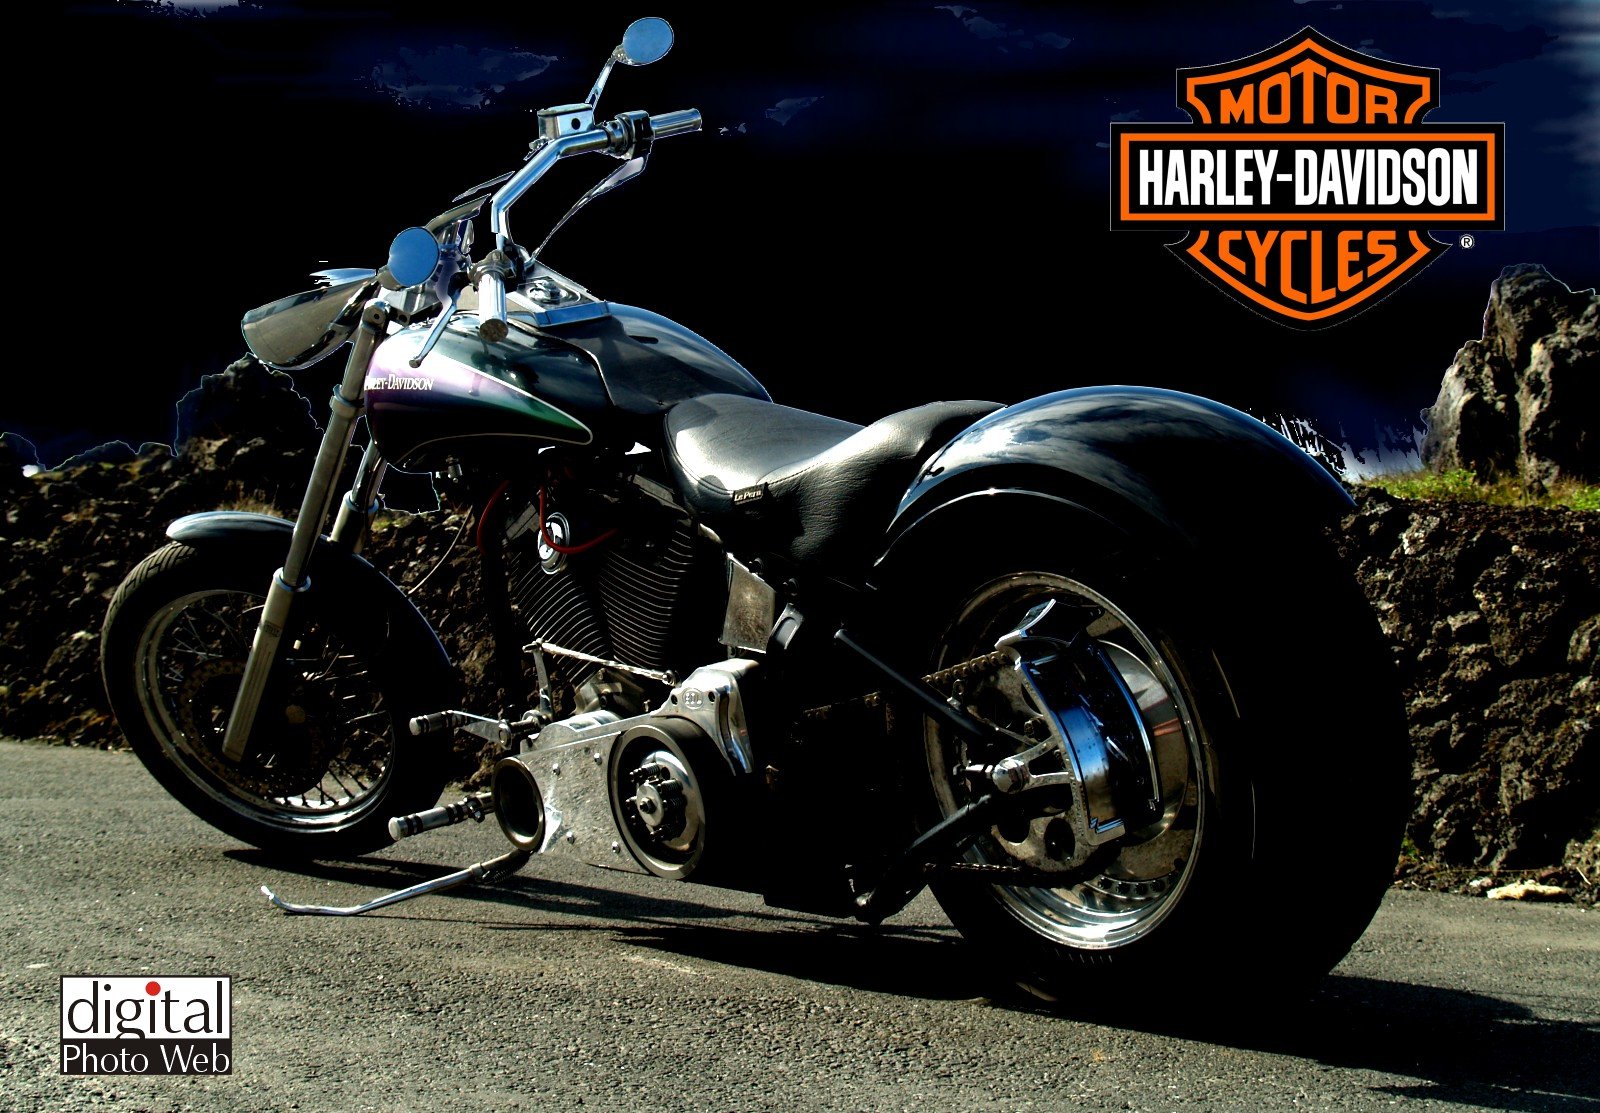  HD Wallpapers Free Download Harley Davidson Bikes Desktop Full HD